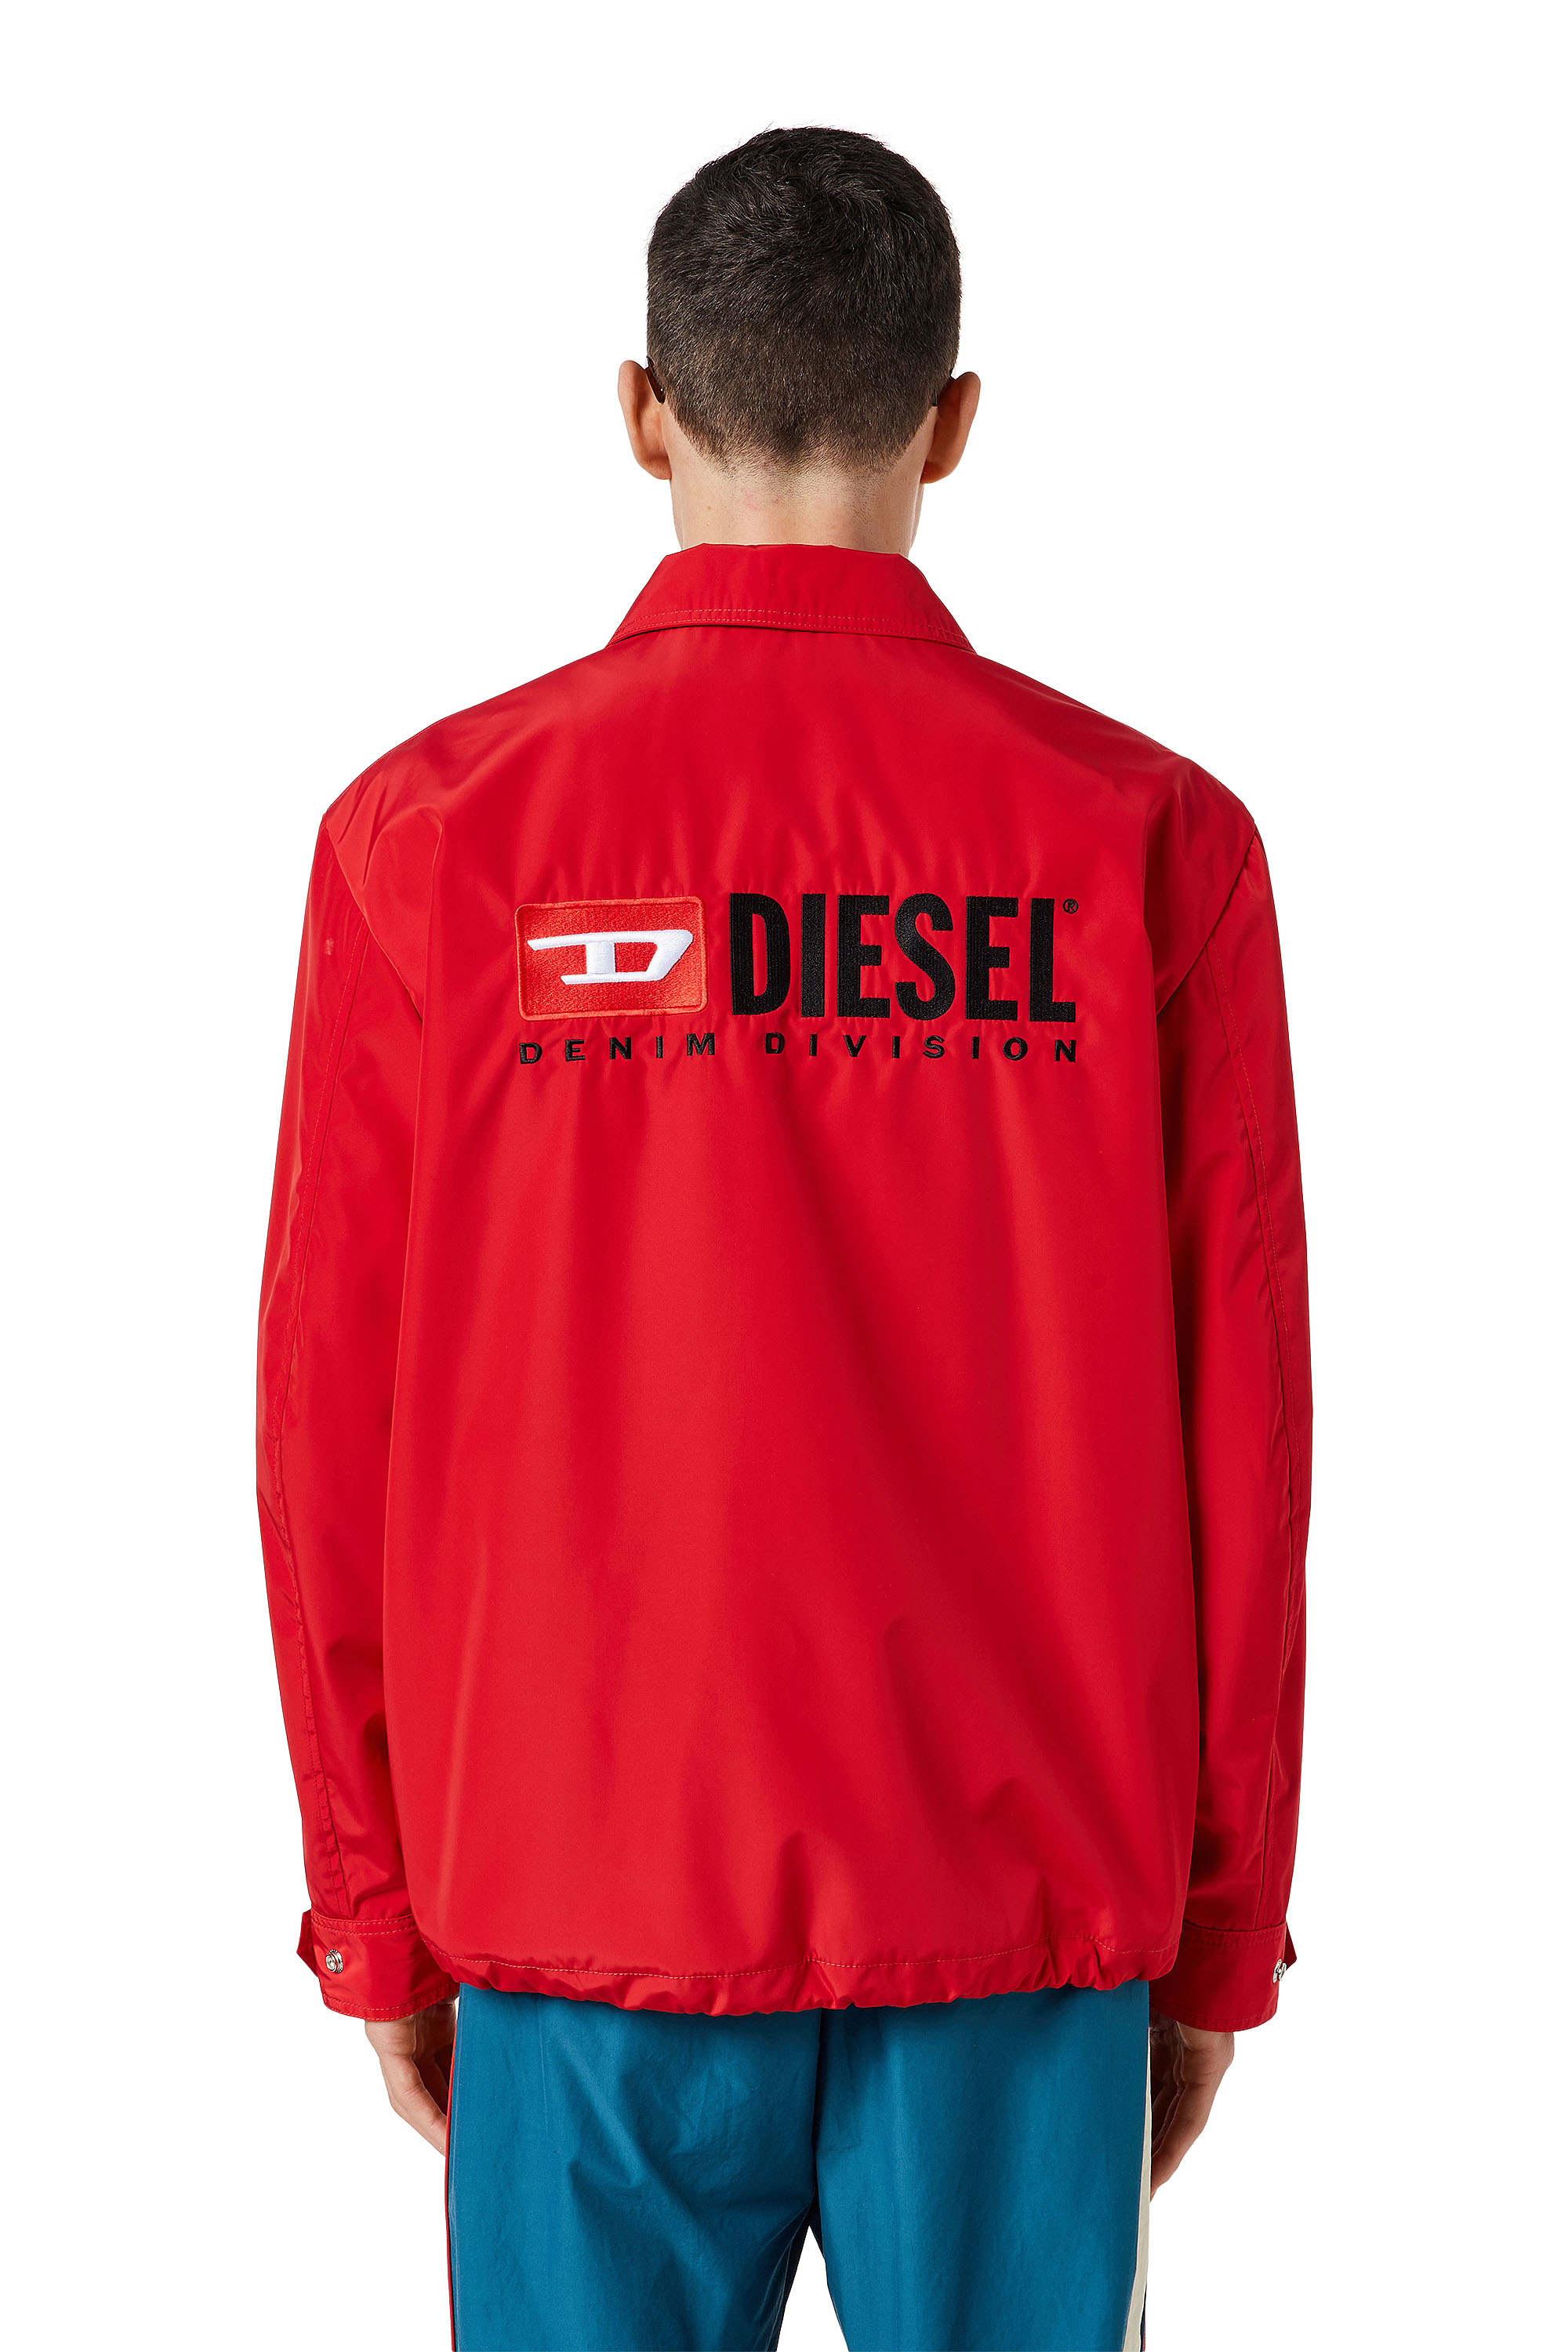 Diesel - J-COAL-NP, Rojo - Image 2